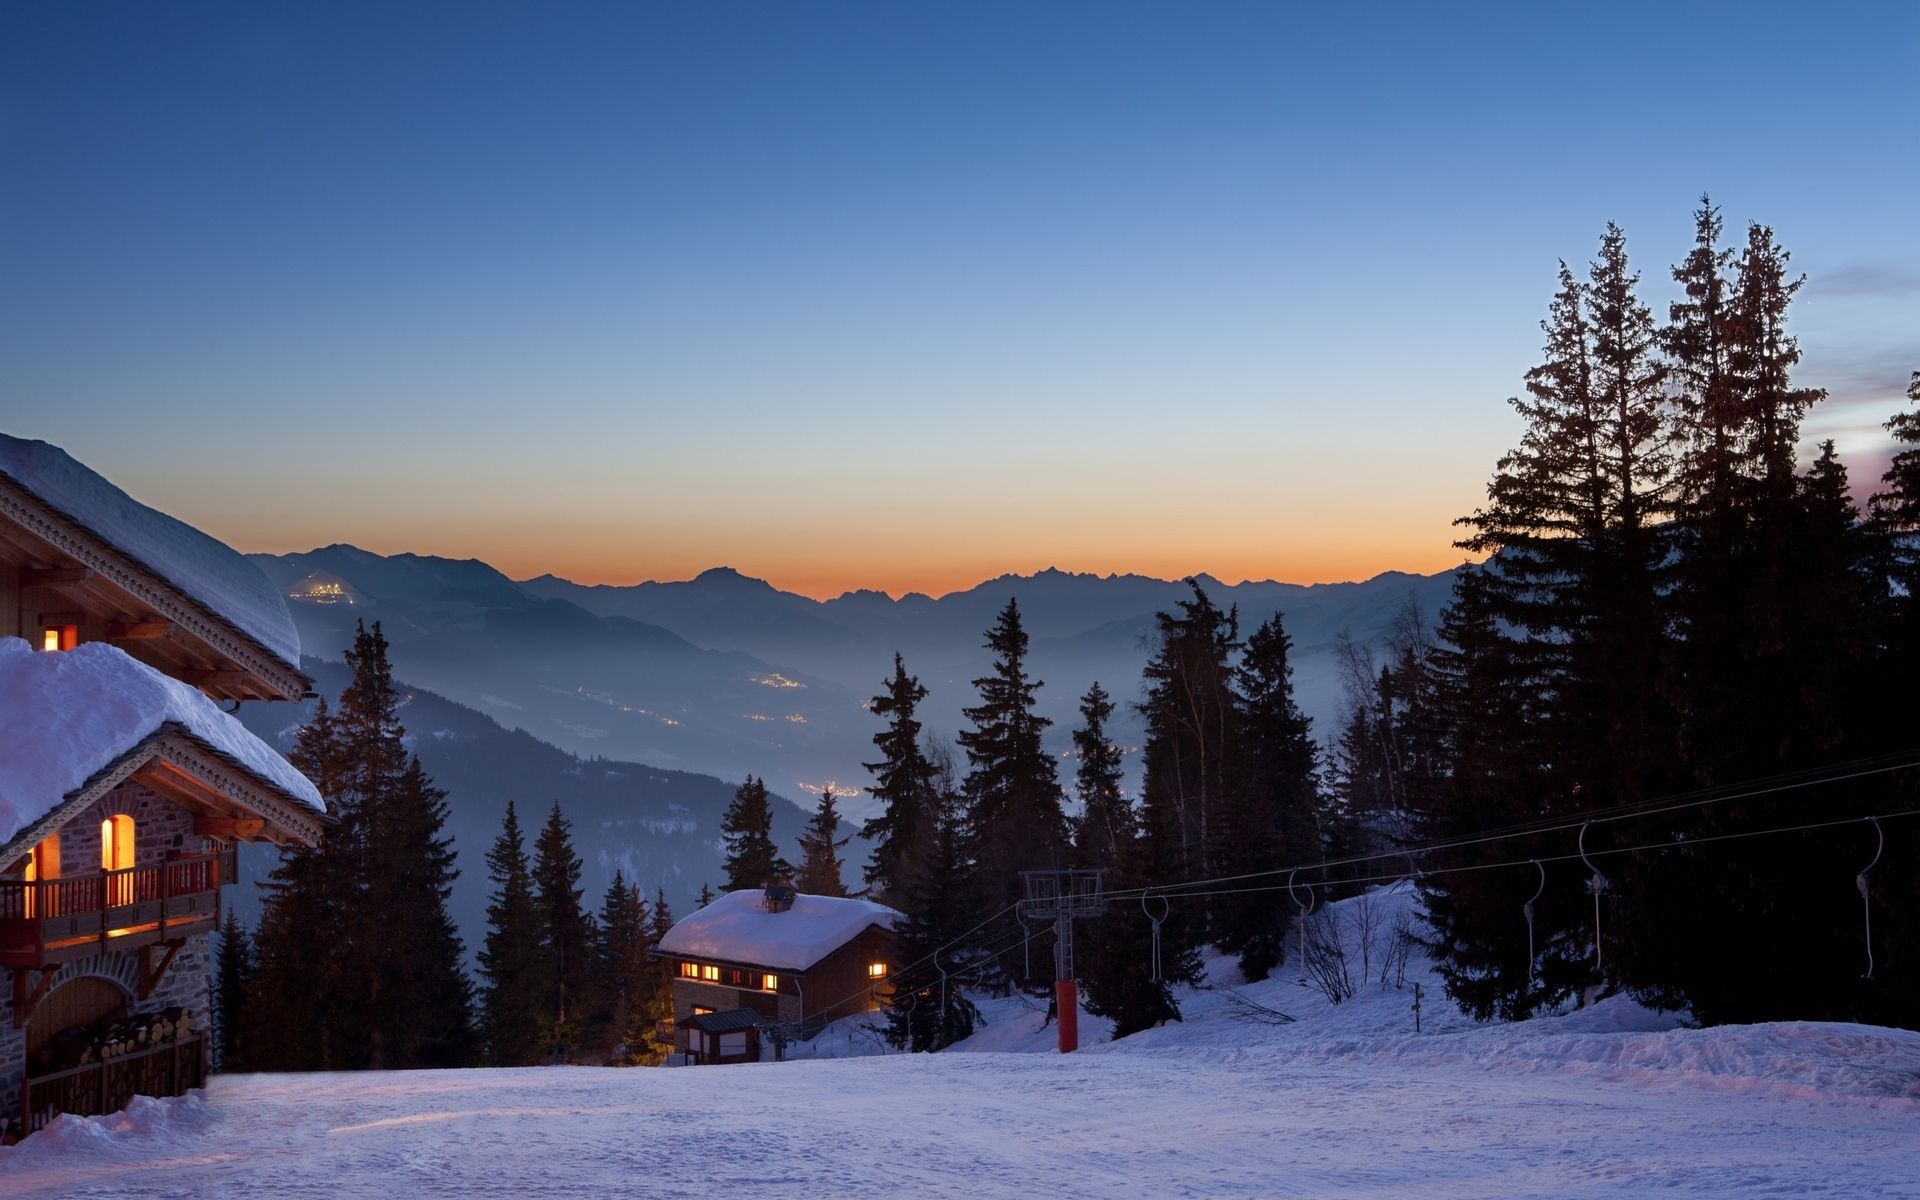 Free download winter snow resort mountains trees sunset sunrise